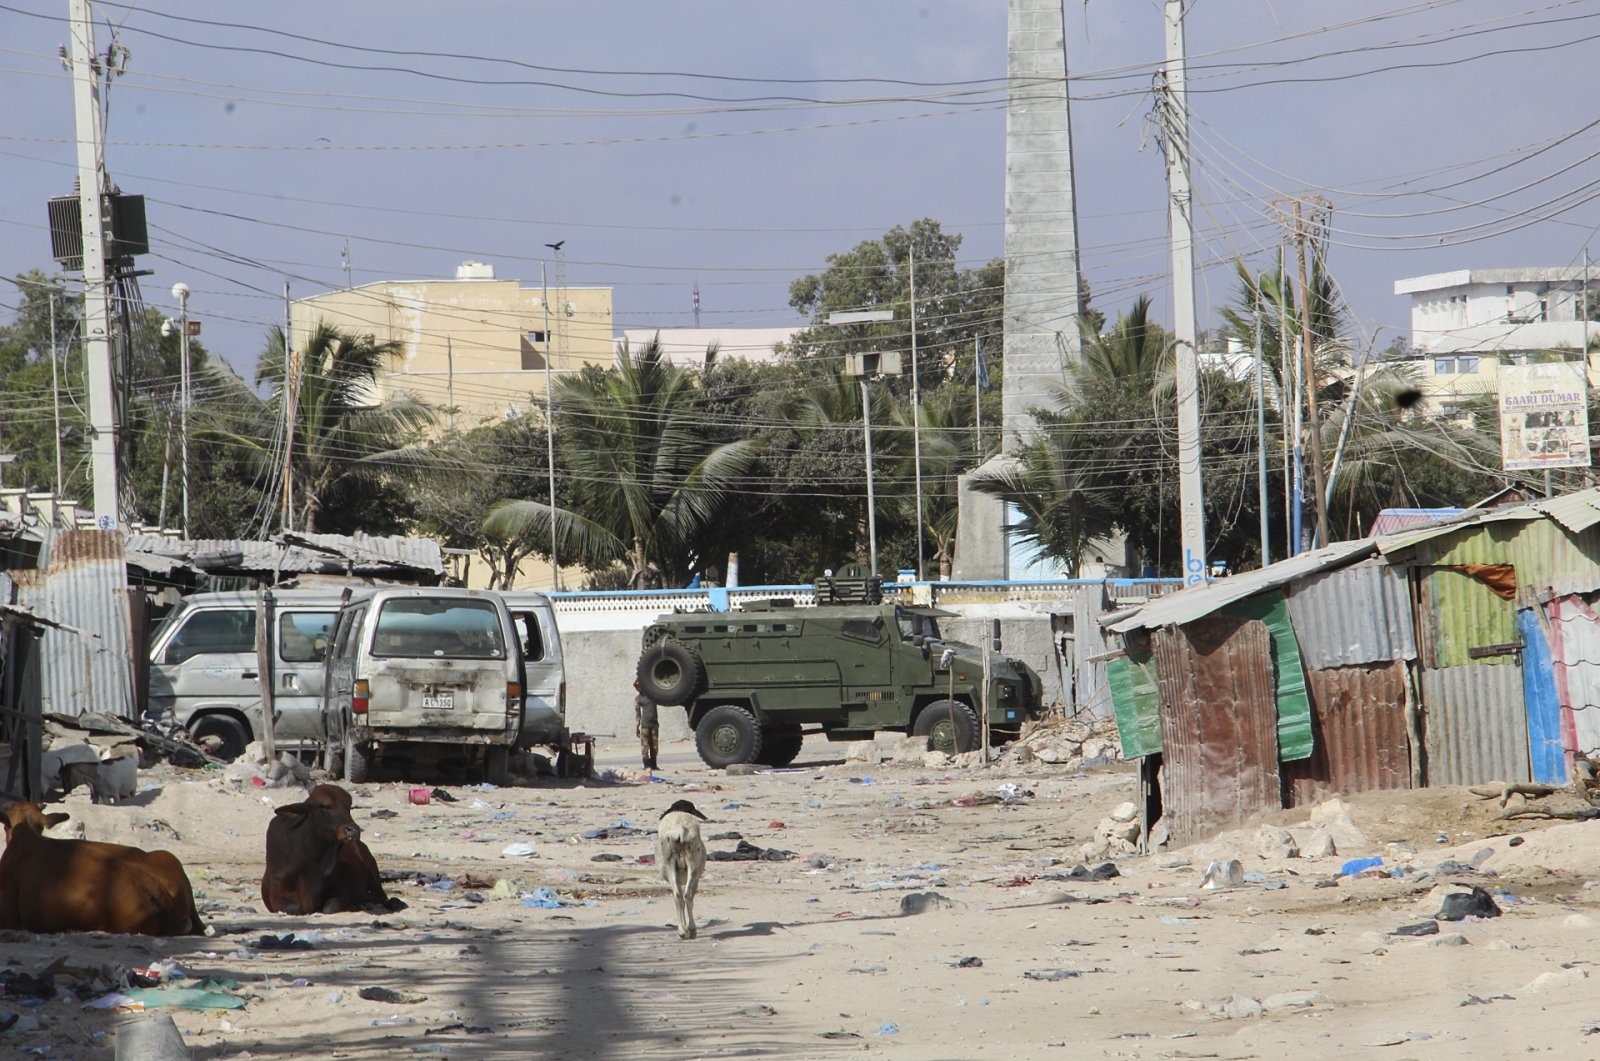 Somali military forces seal off a road near the Somali presidential palace in Mogadishu, Somalia, Feb. 19, 2021. (EPA Photo)